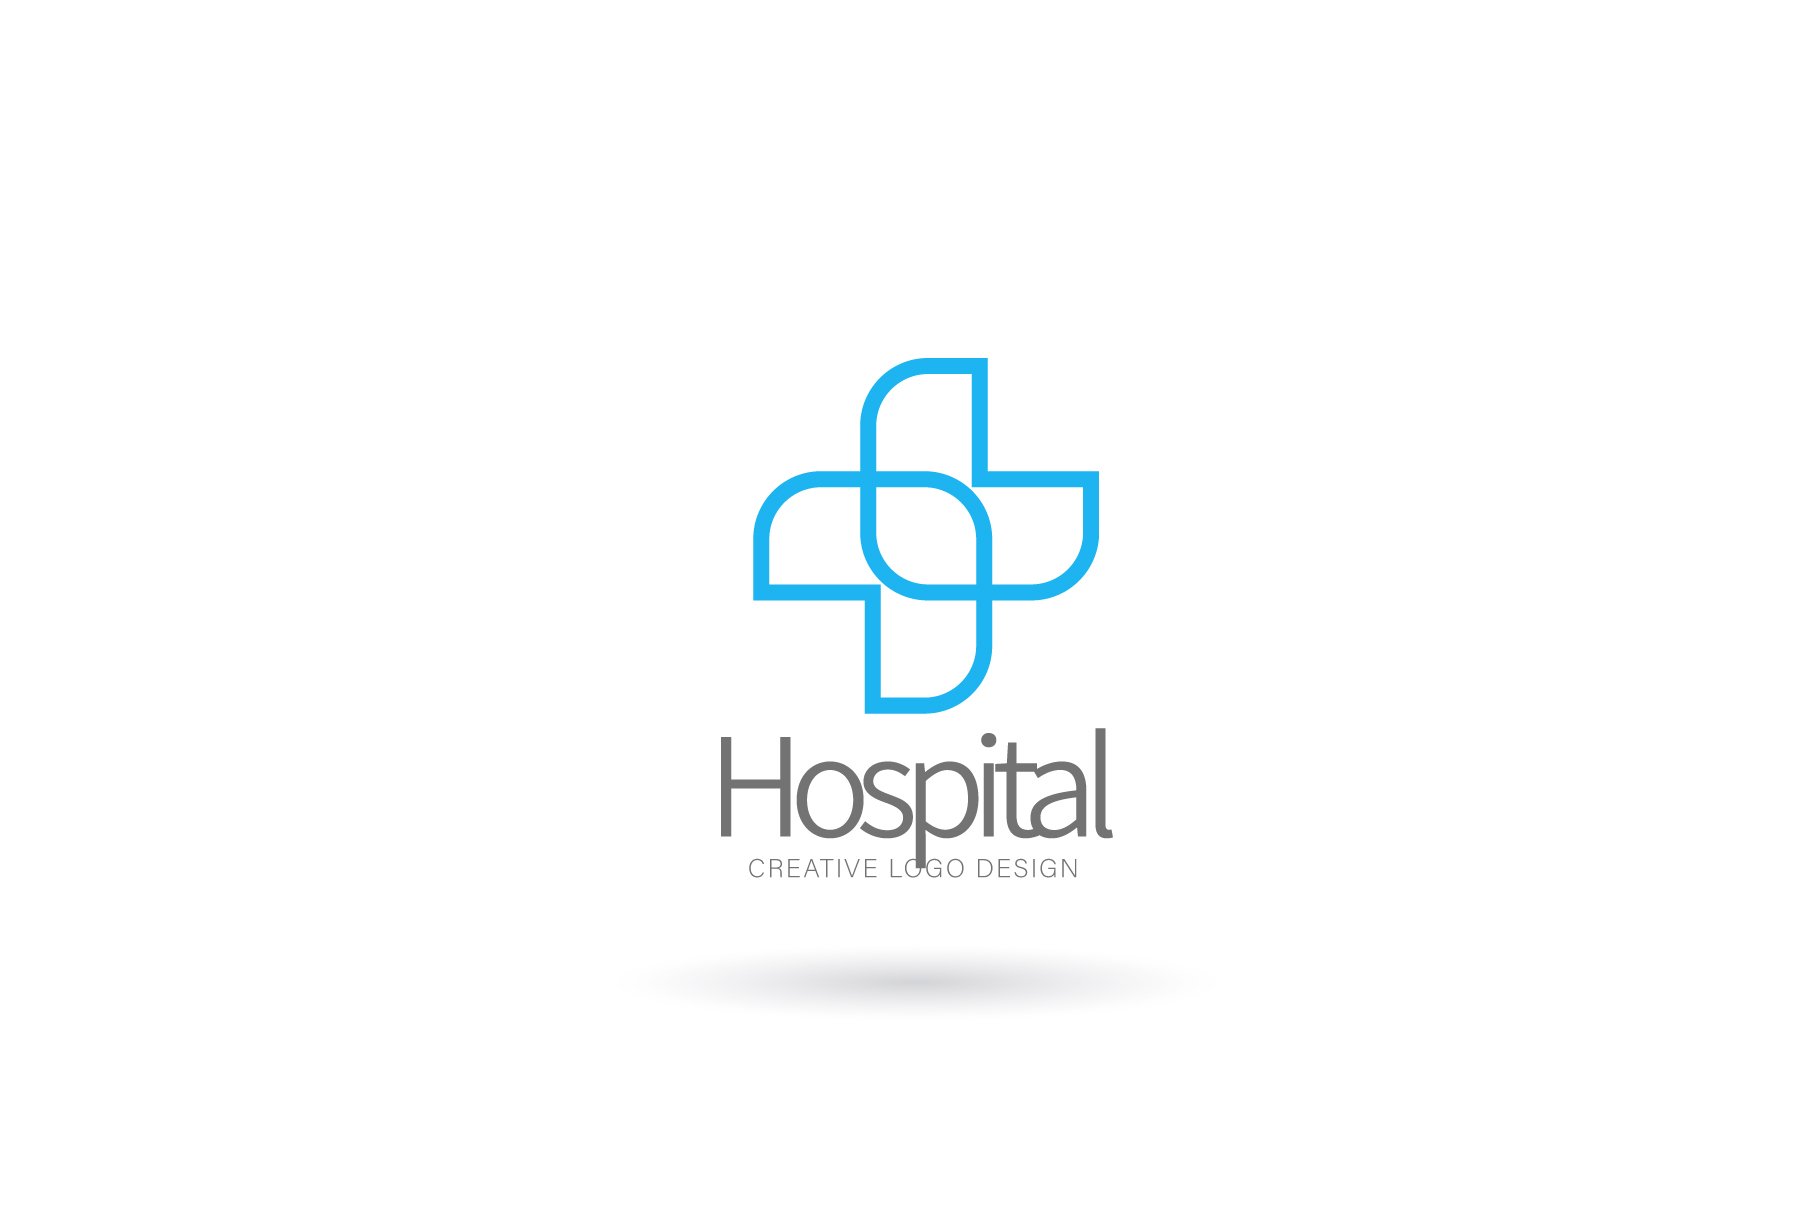 Hospital logo preview image.